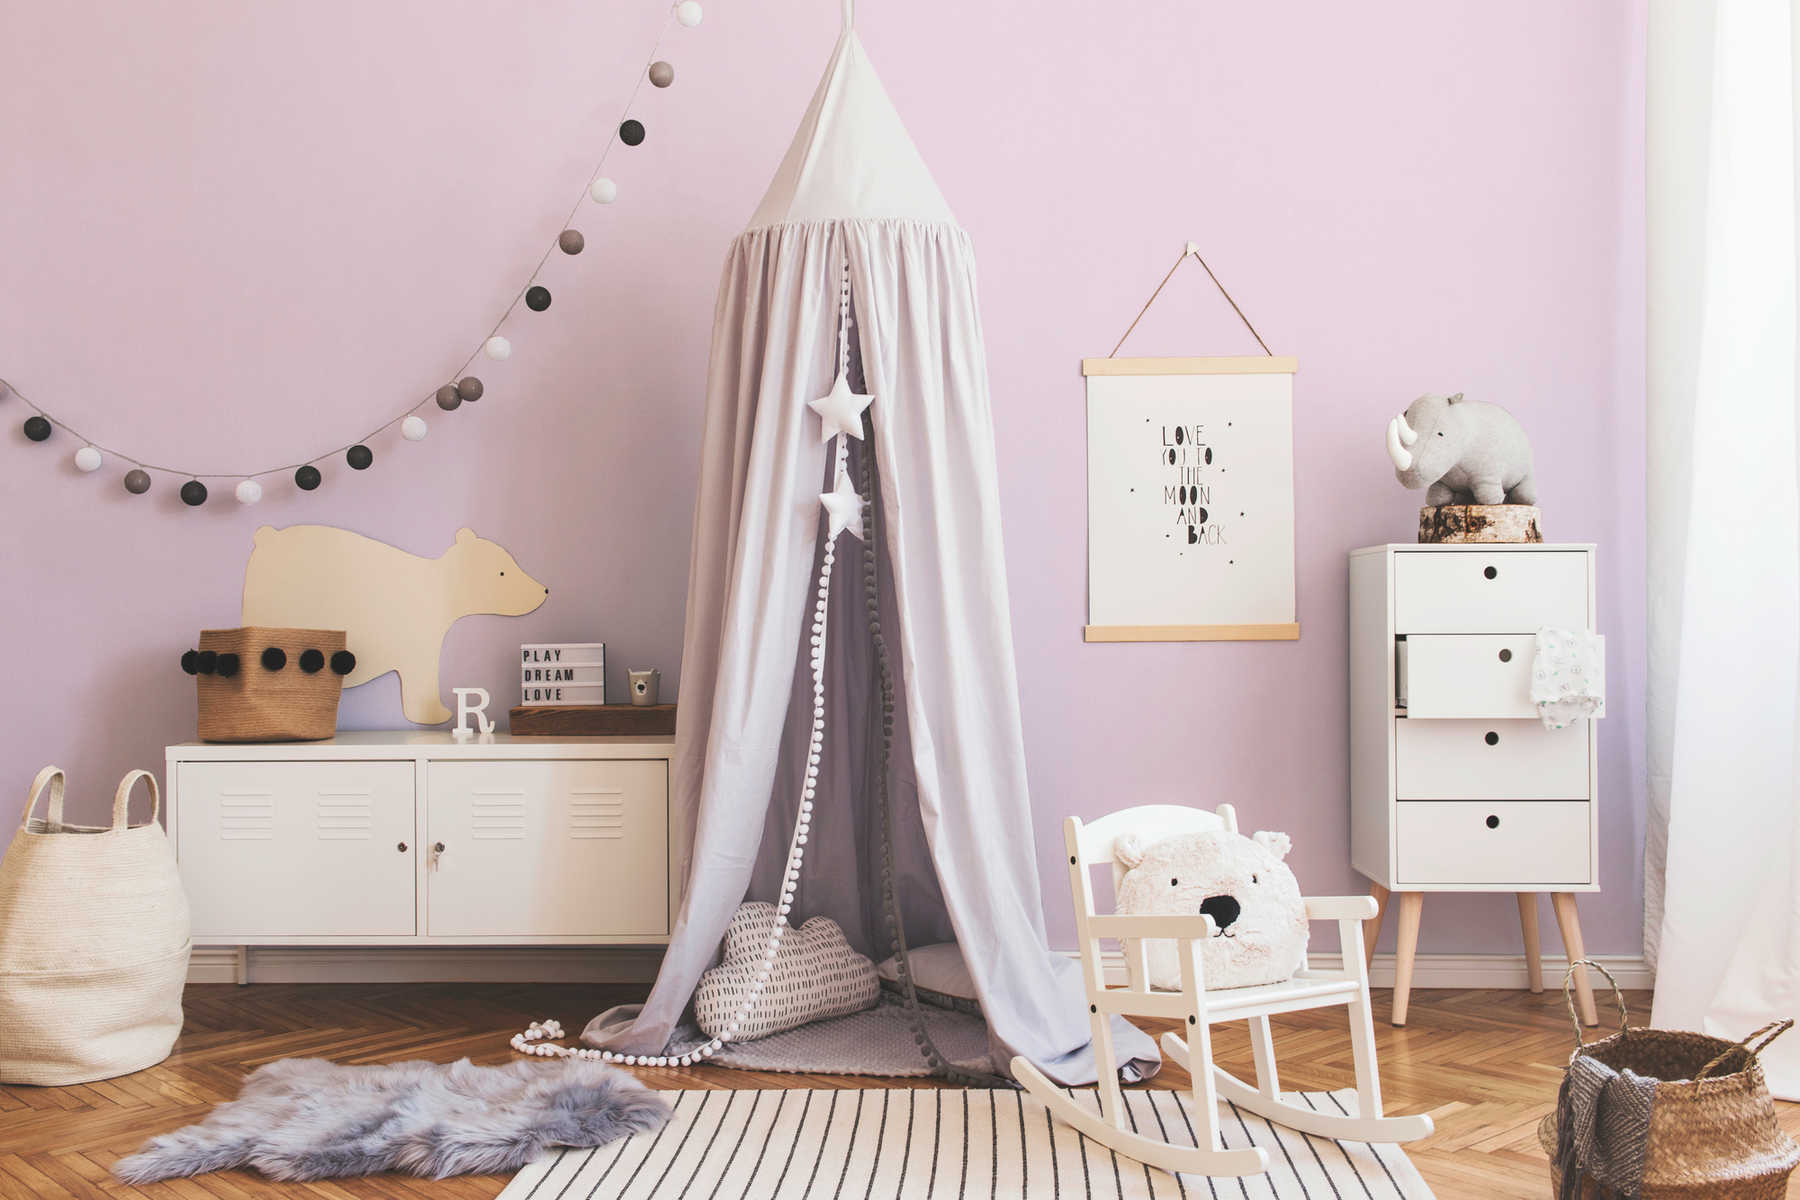             Nursery wallpaper plain for girls - pink
        